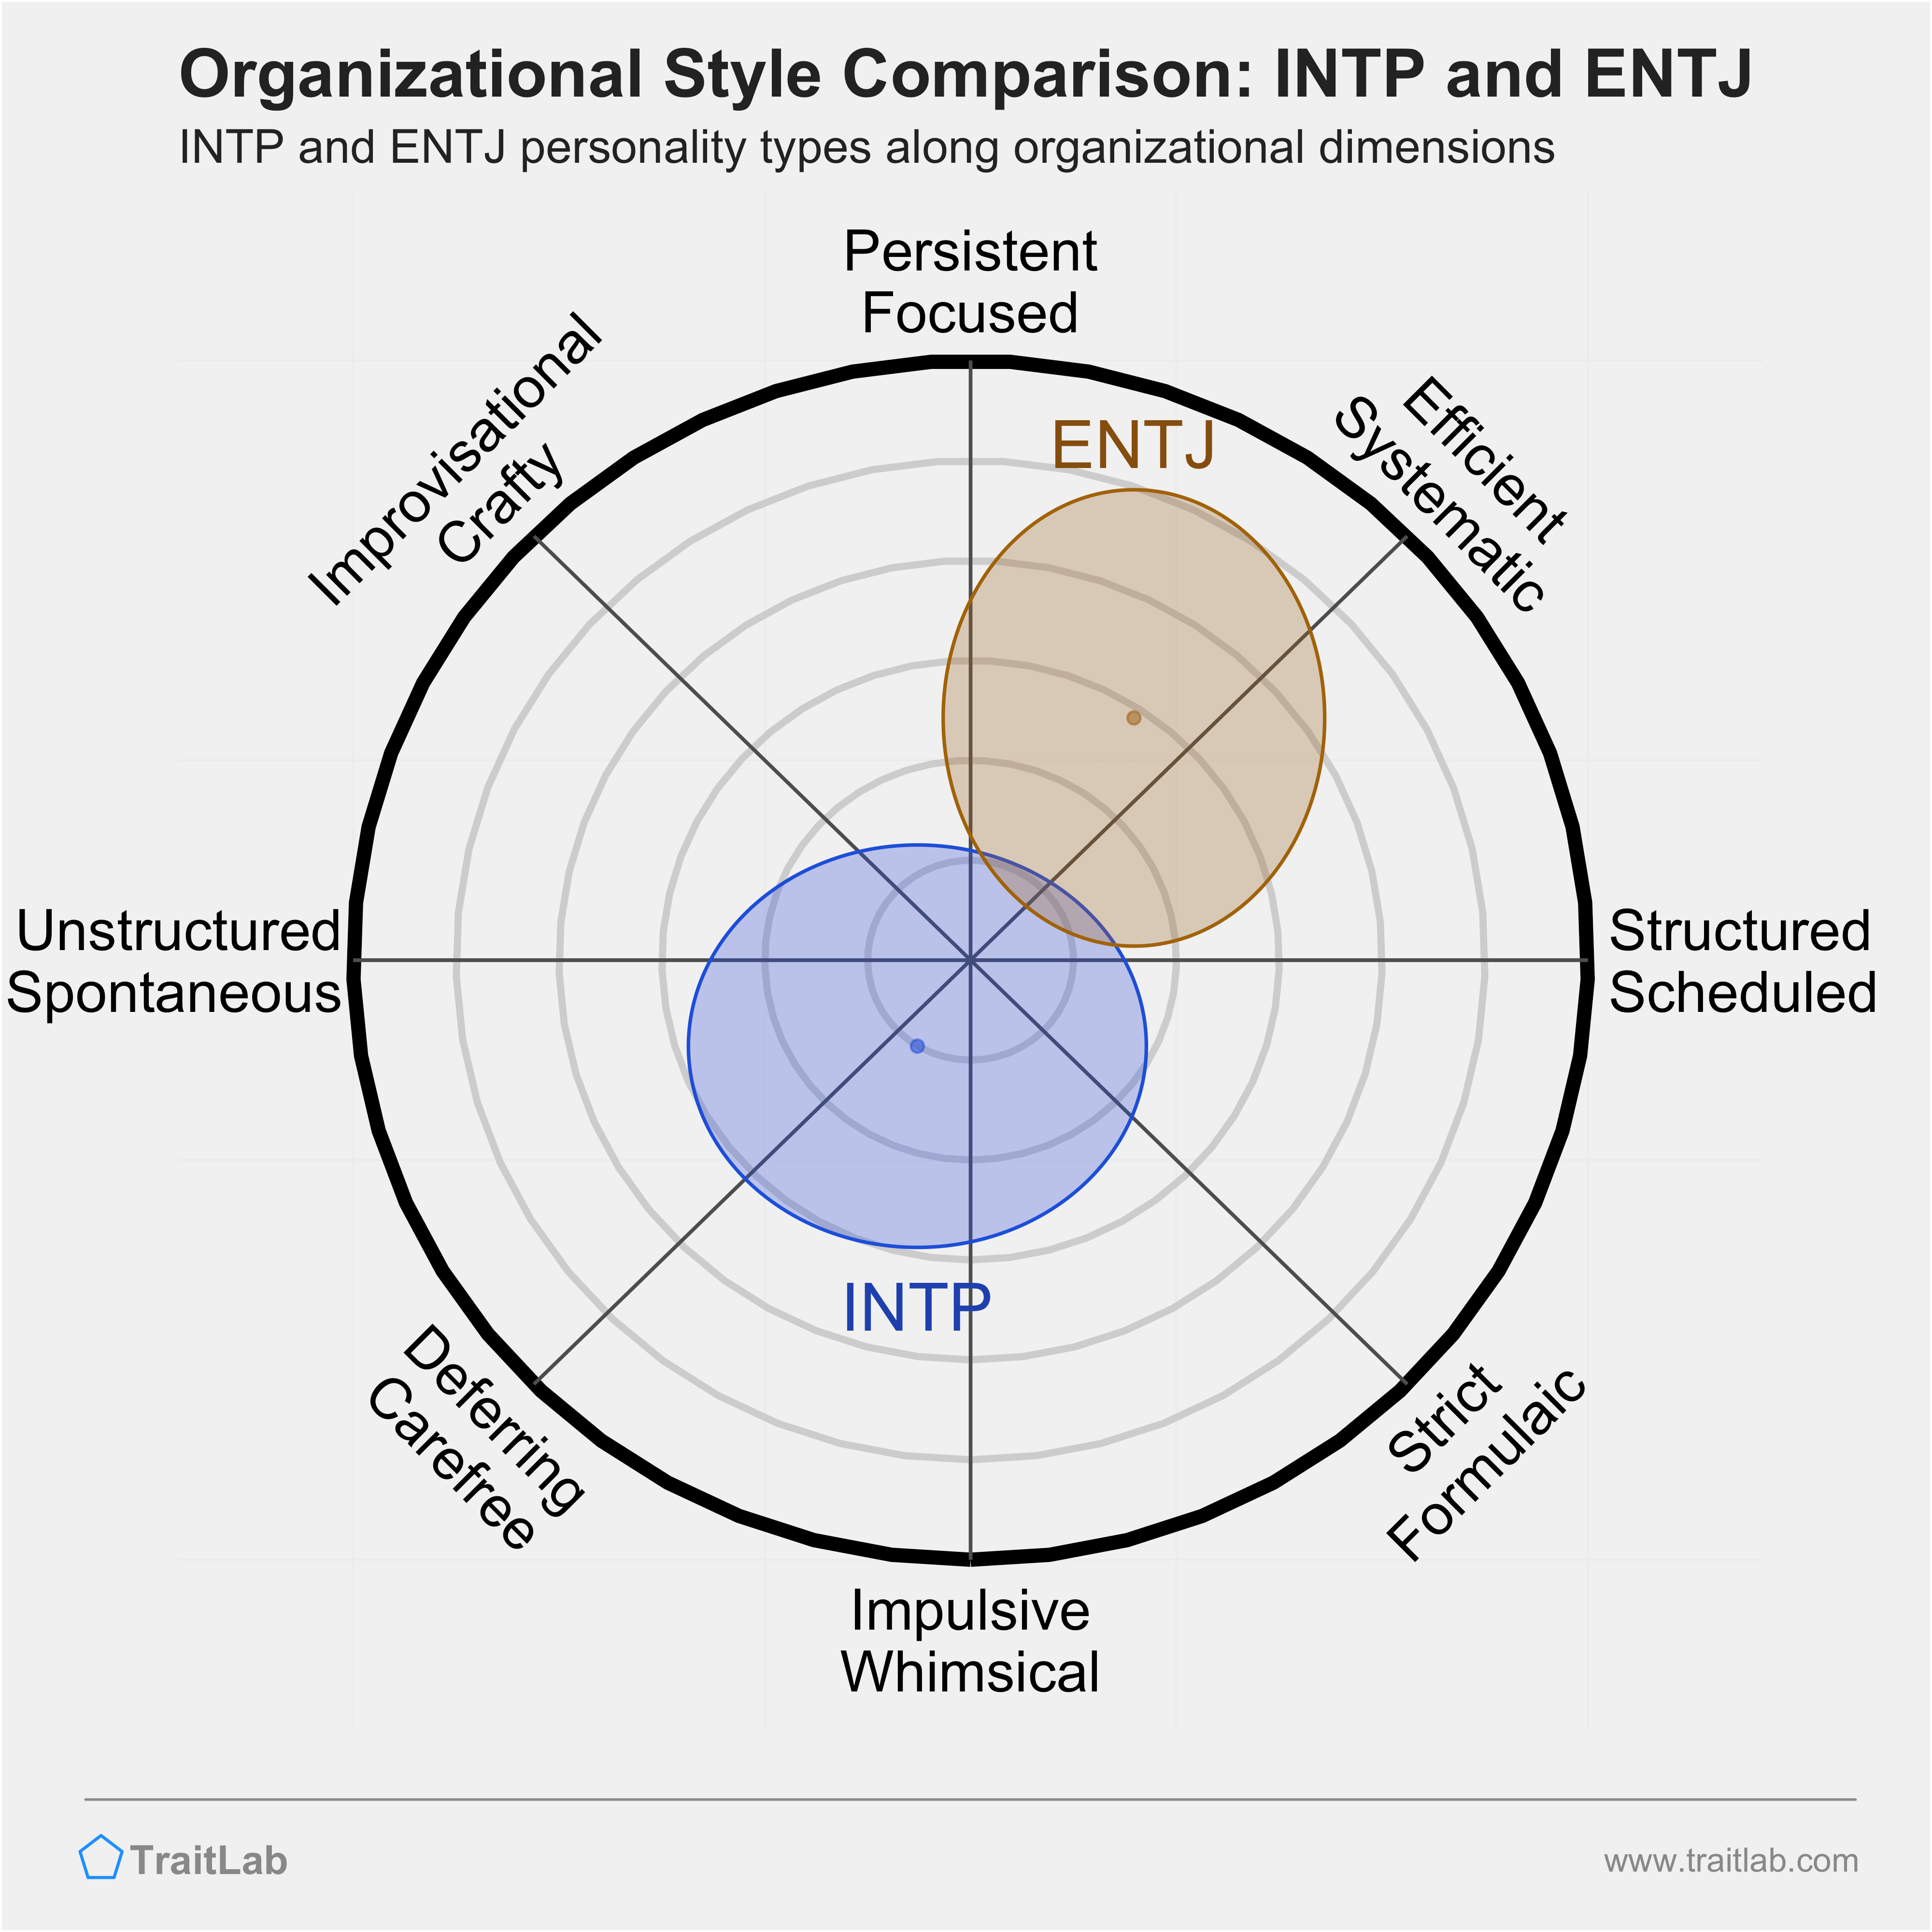 INTP and ENTJ comparison across organizational dimensions